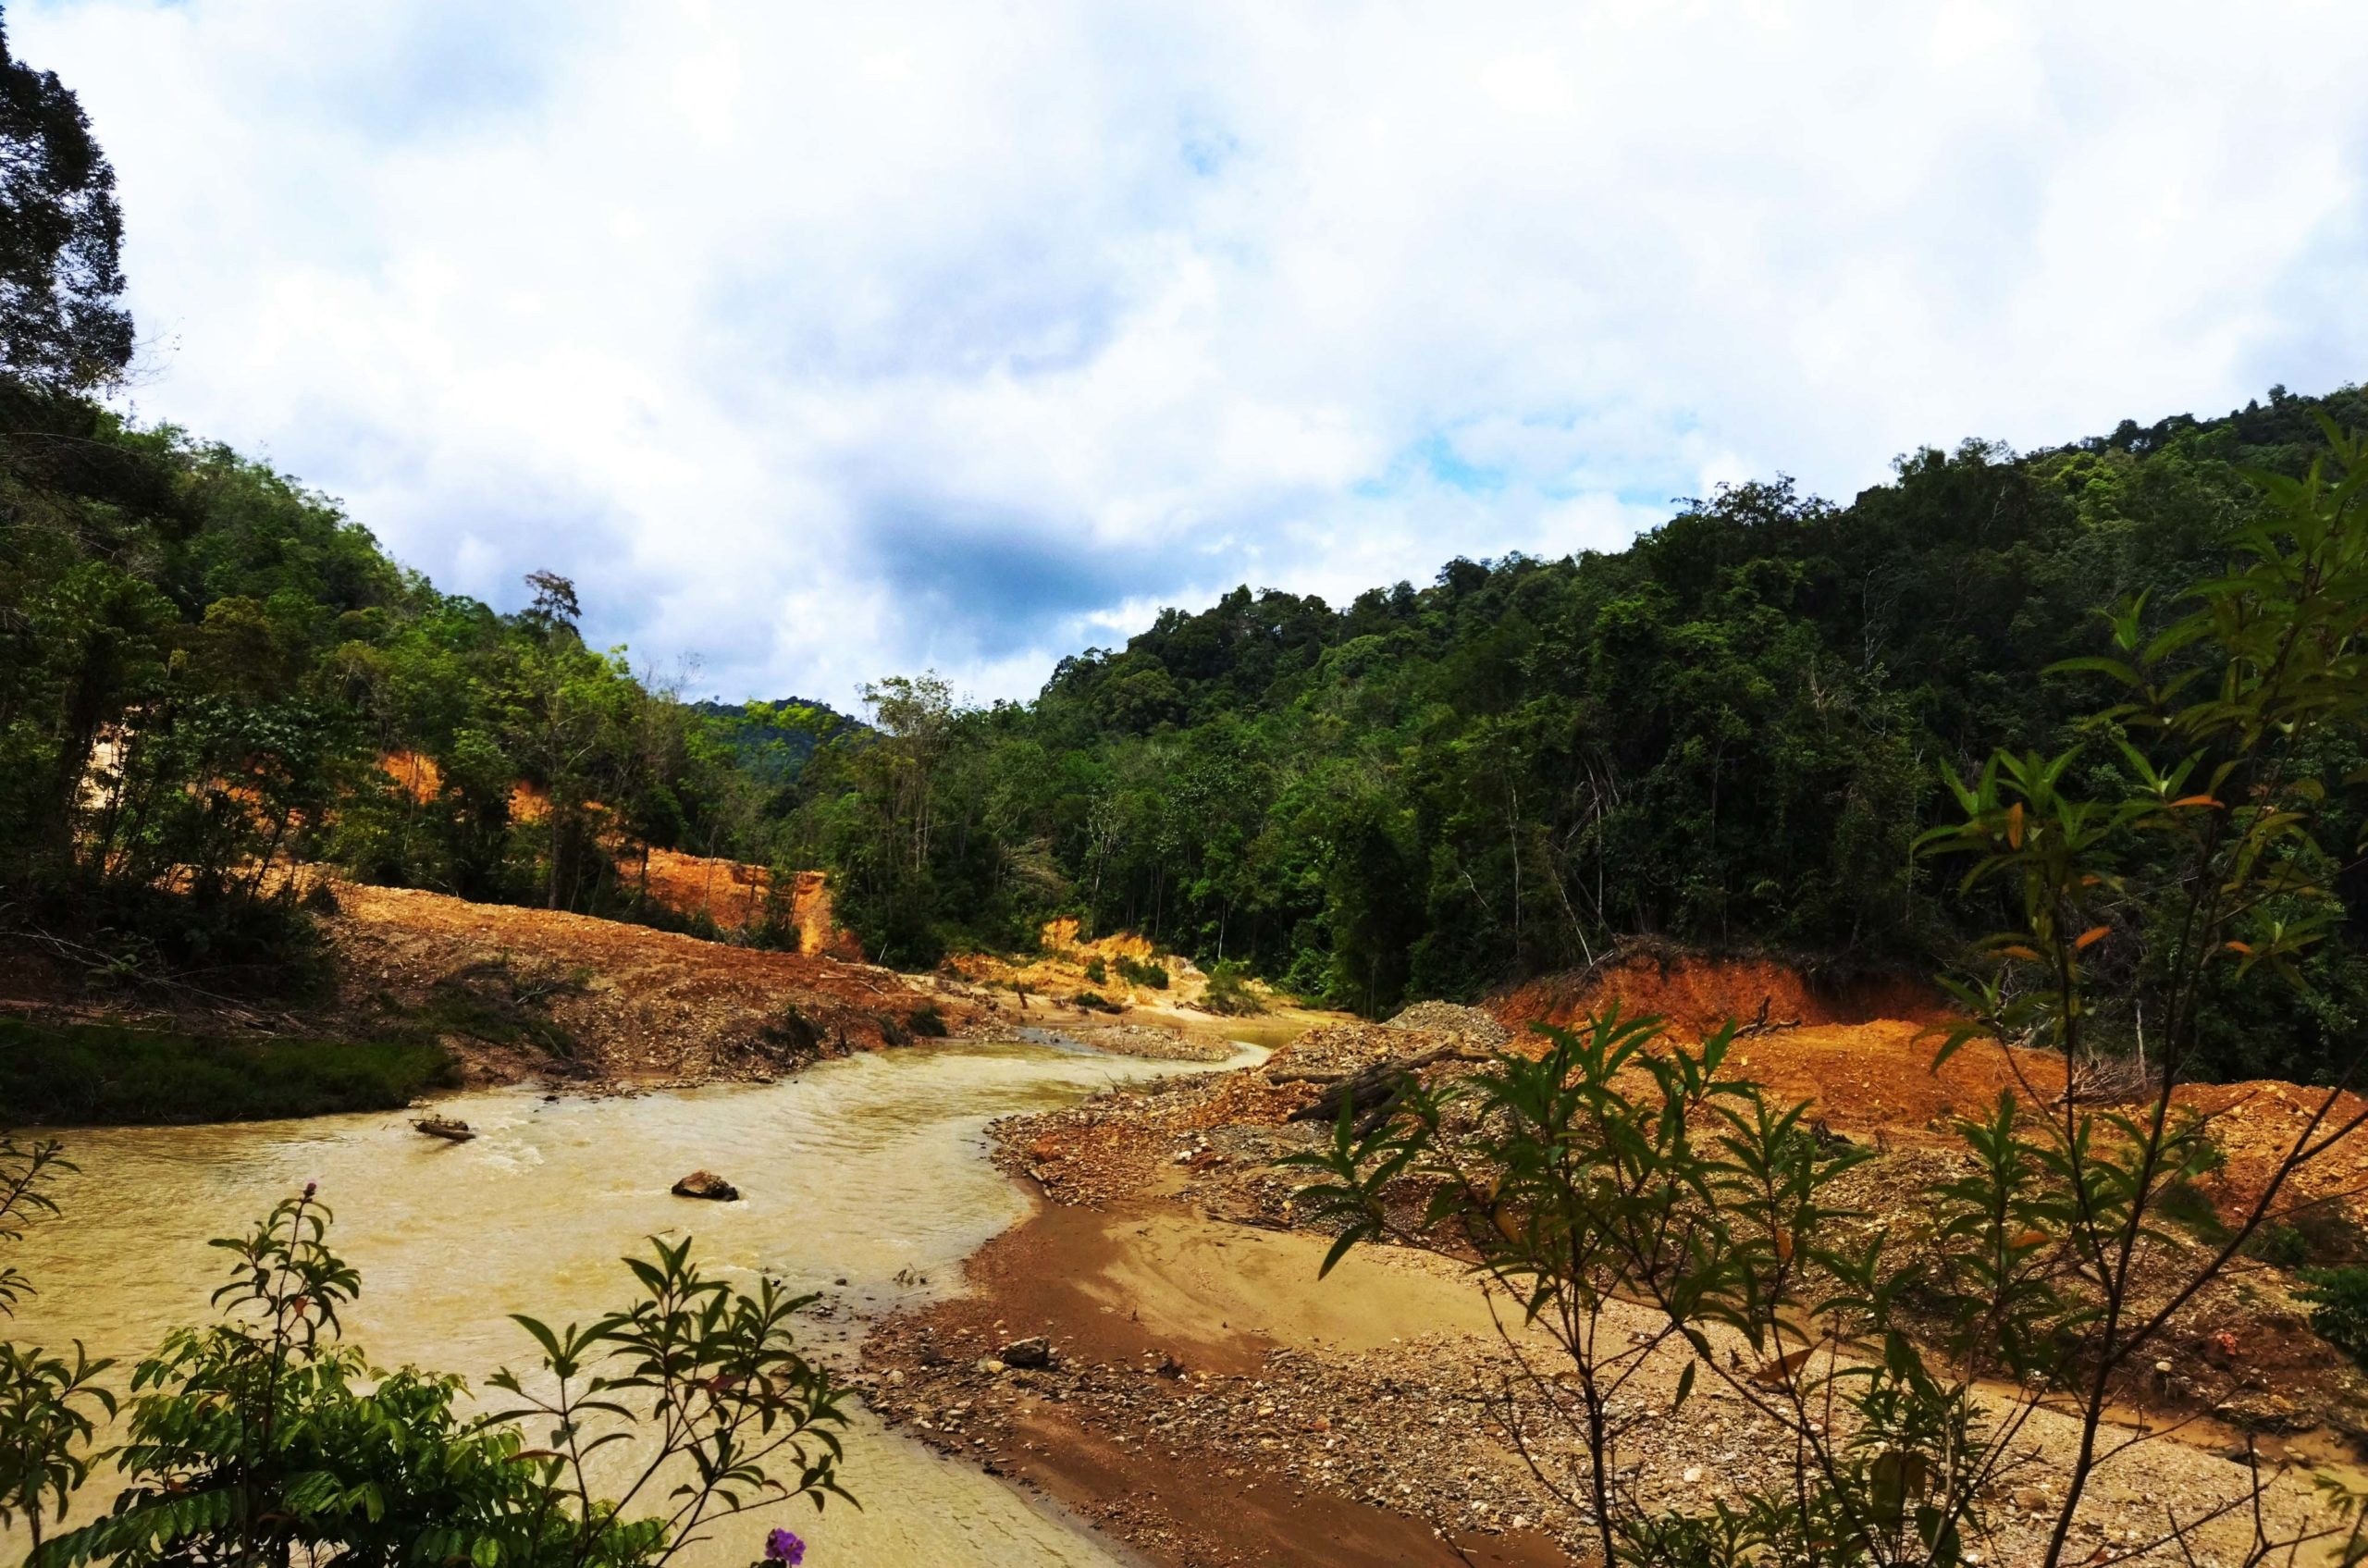 Tambang emas ilegal yang menghancurkan hutan dan sungai di Kecamatan Batang Anai. Desa Raden Anom konsisten menolak tambang ilegal dengan alat berat yang merusak. Foto: Elviza Diana/ Mongabay Indonesia